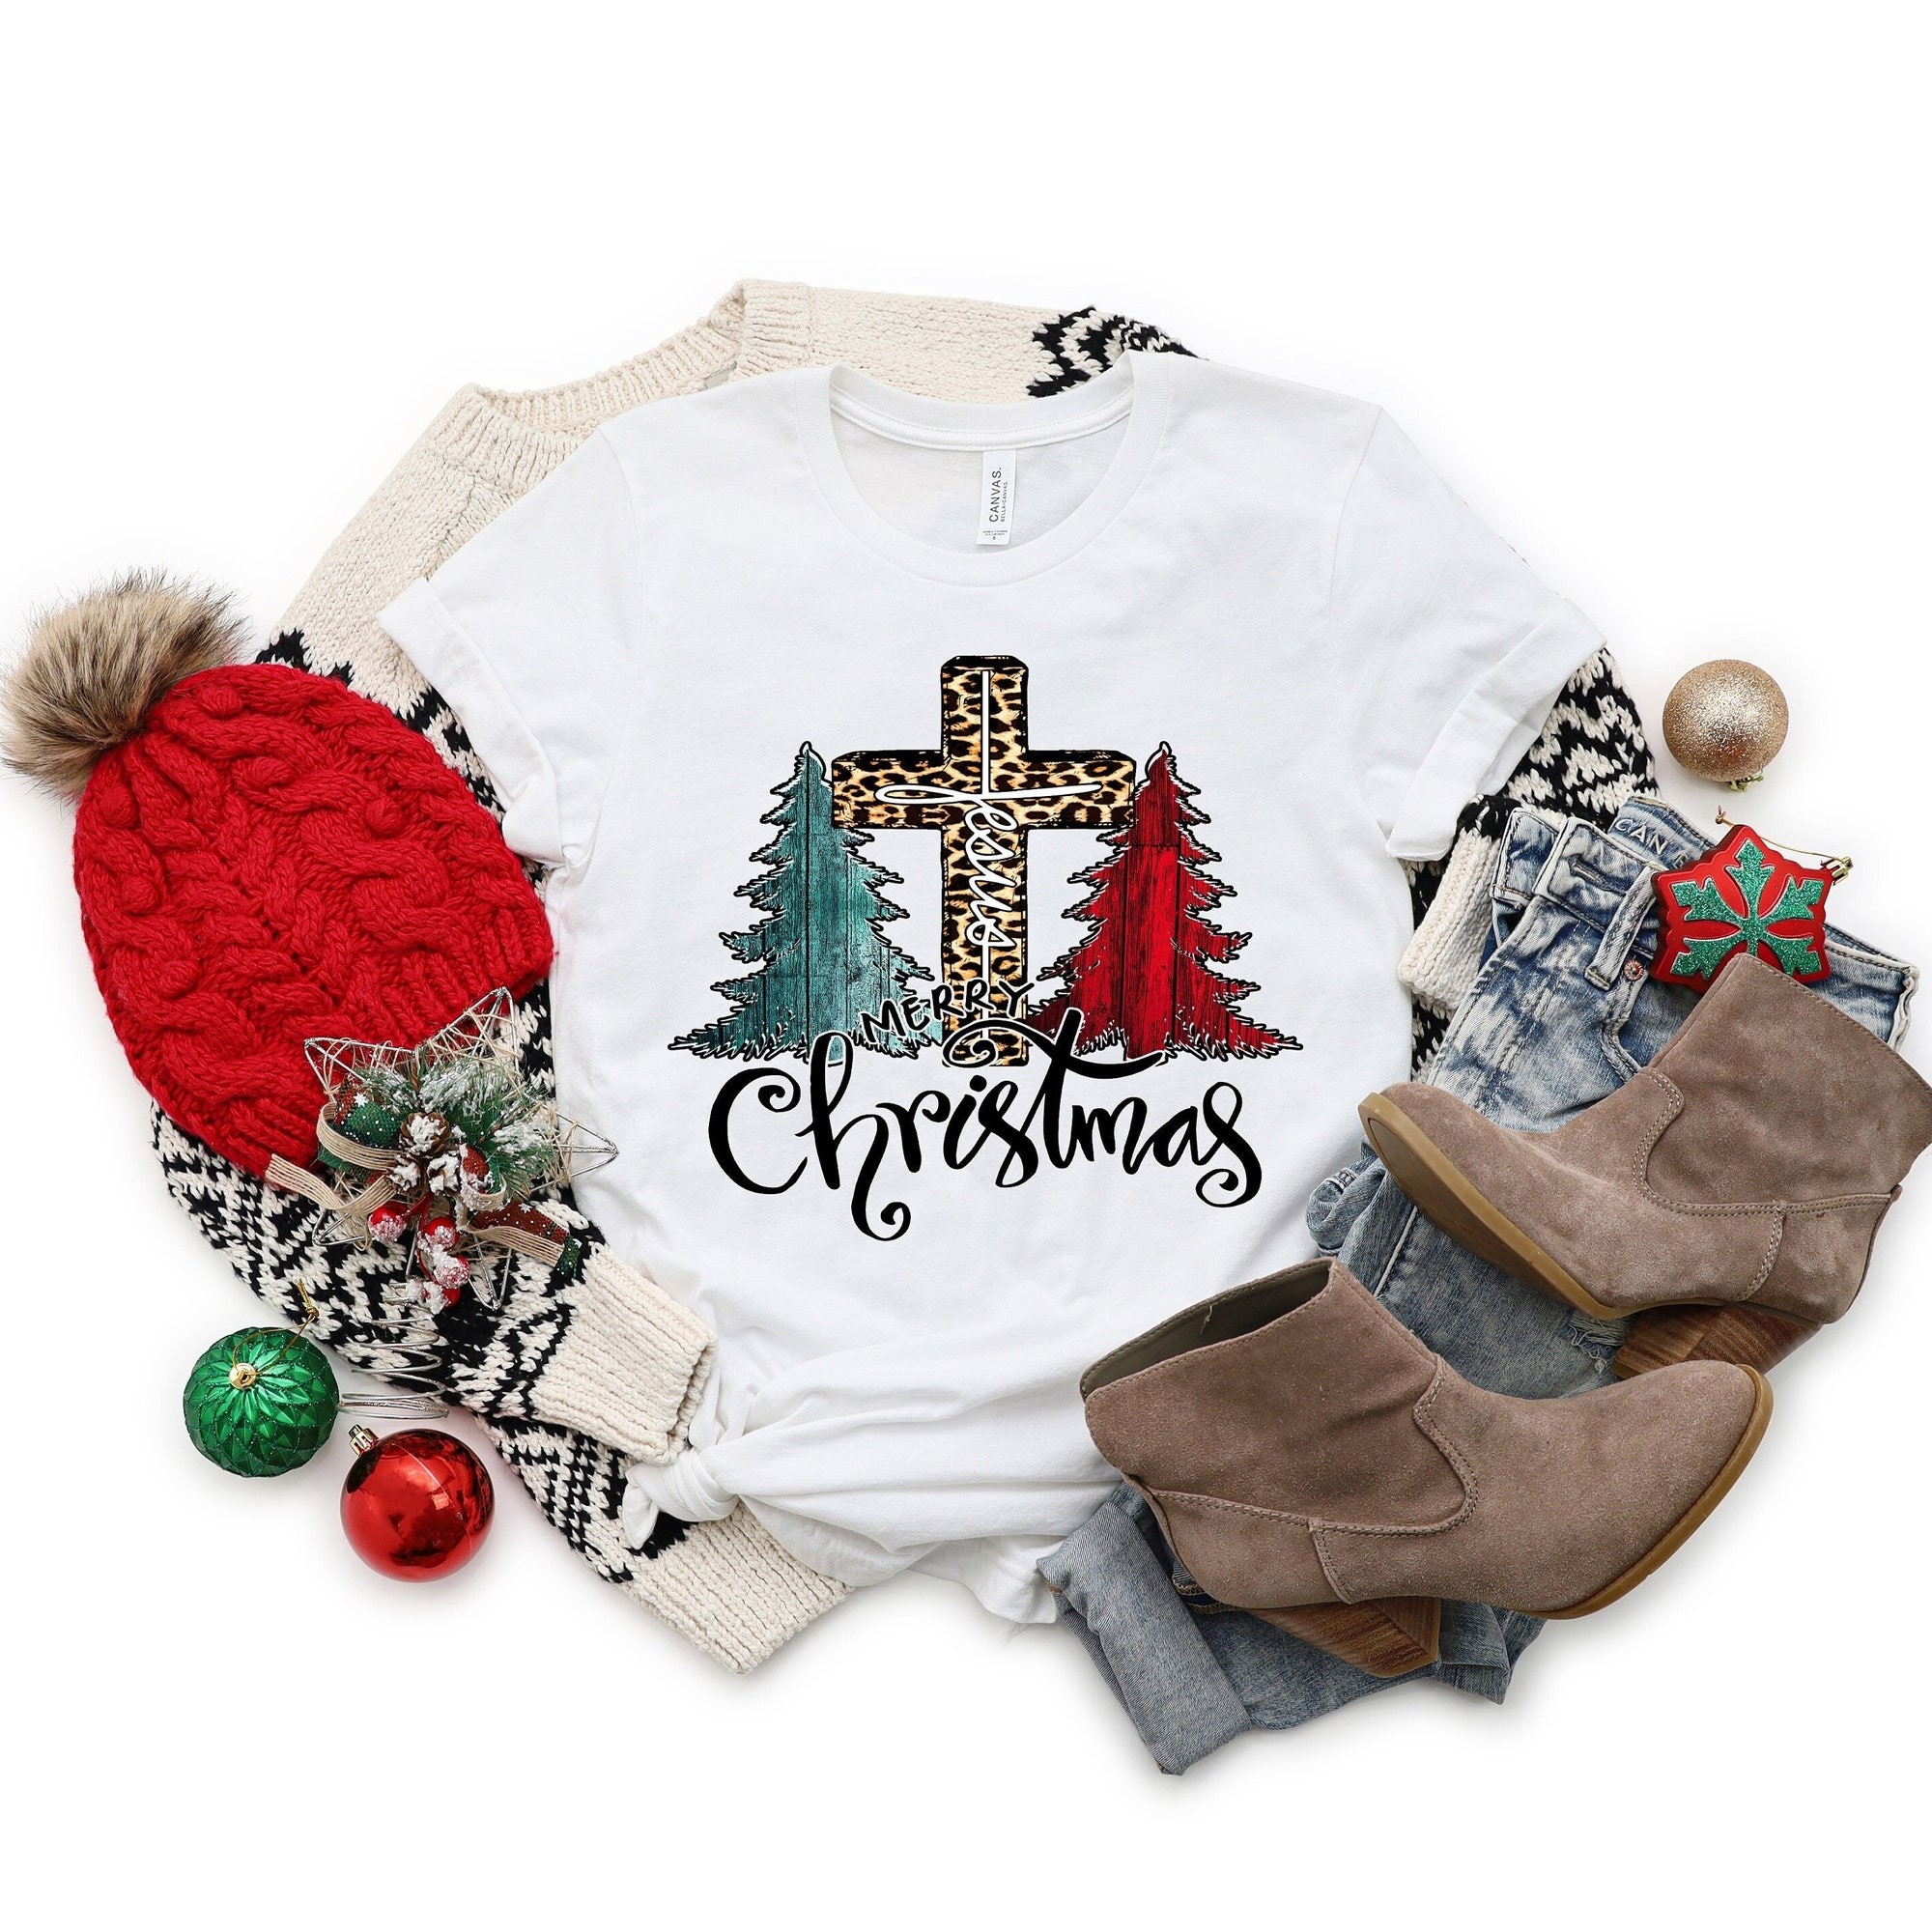 Buffalo Plaid Christmas T-shirt,Merry Christmas Shirt,Christmas T-shirt, Christmas Family Shirt,Christmas Gift, Holiday Gift.Matching Shirt 2